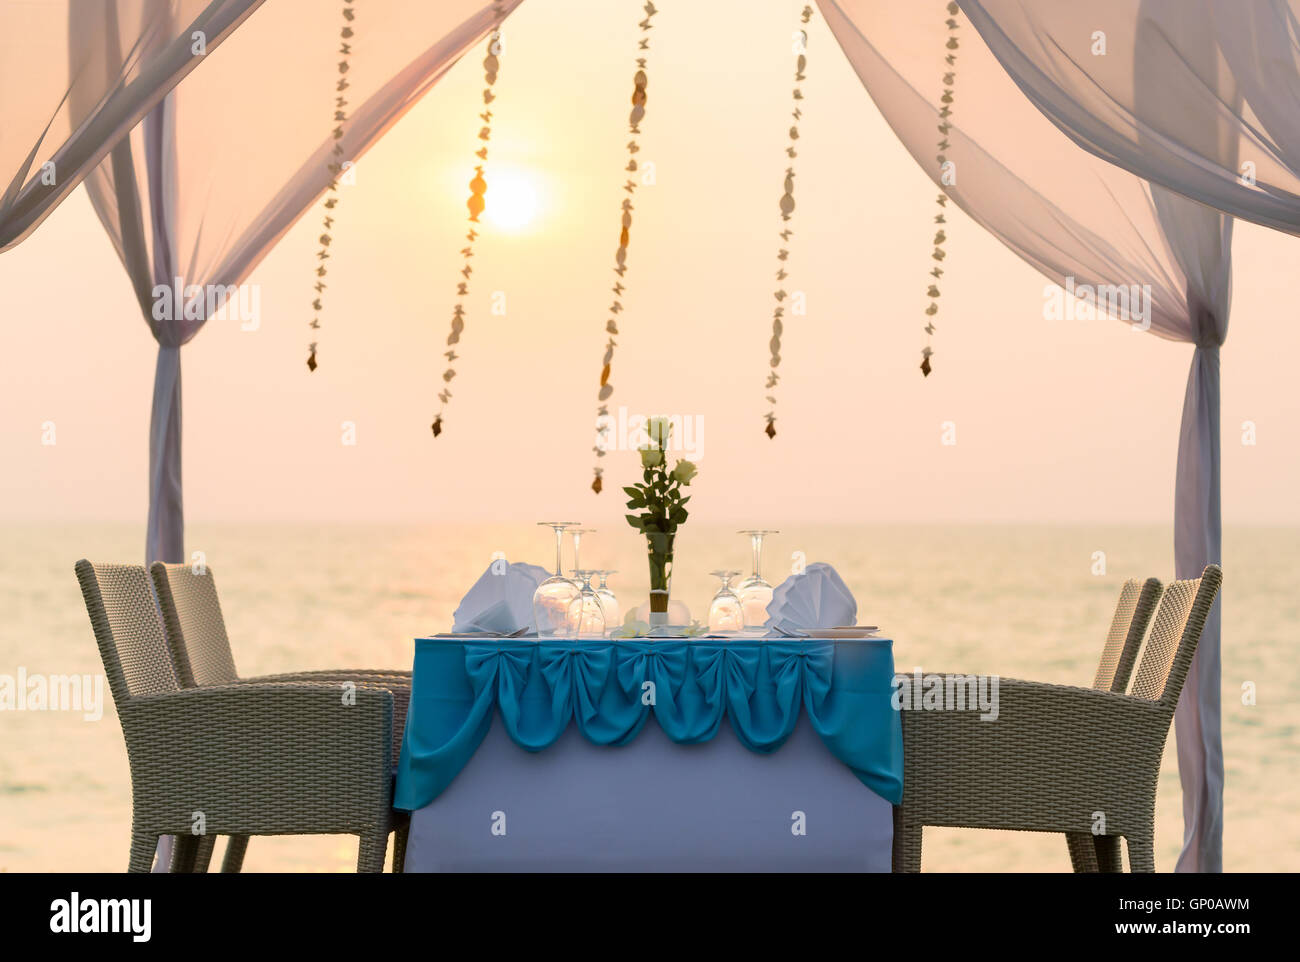 Romantic dinner setting on the beach at sunset. Stock Photo